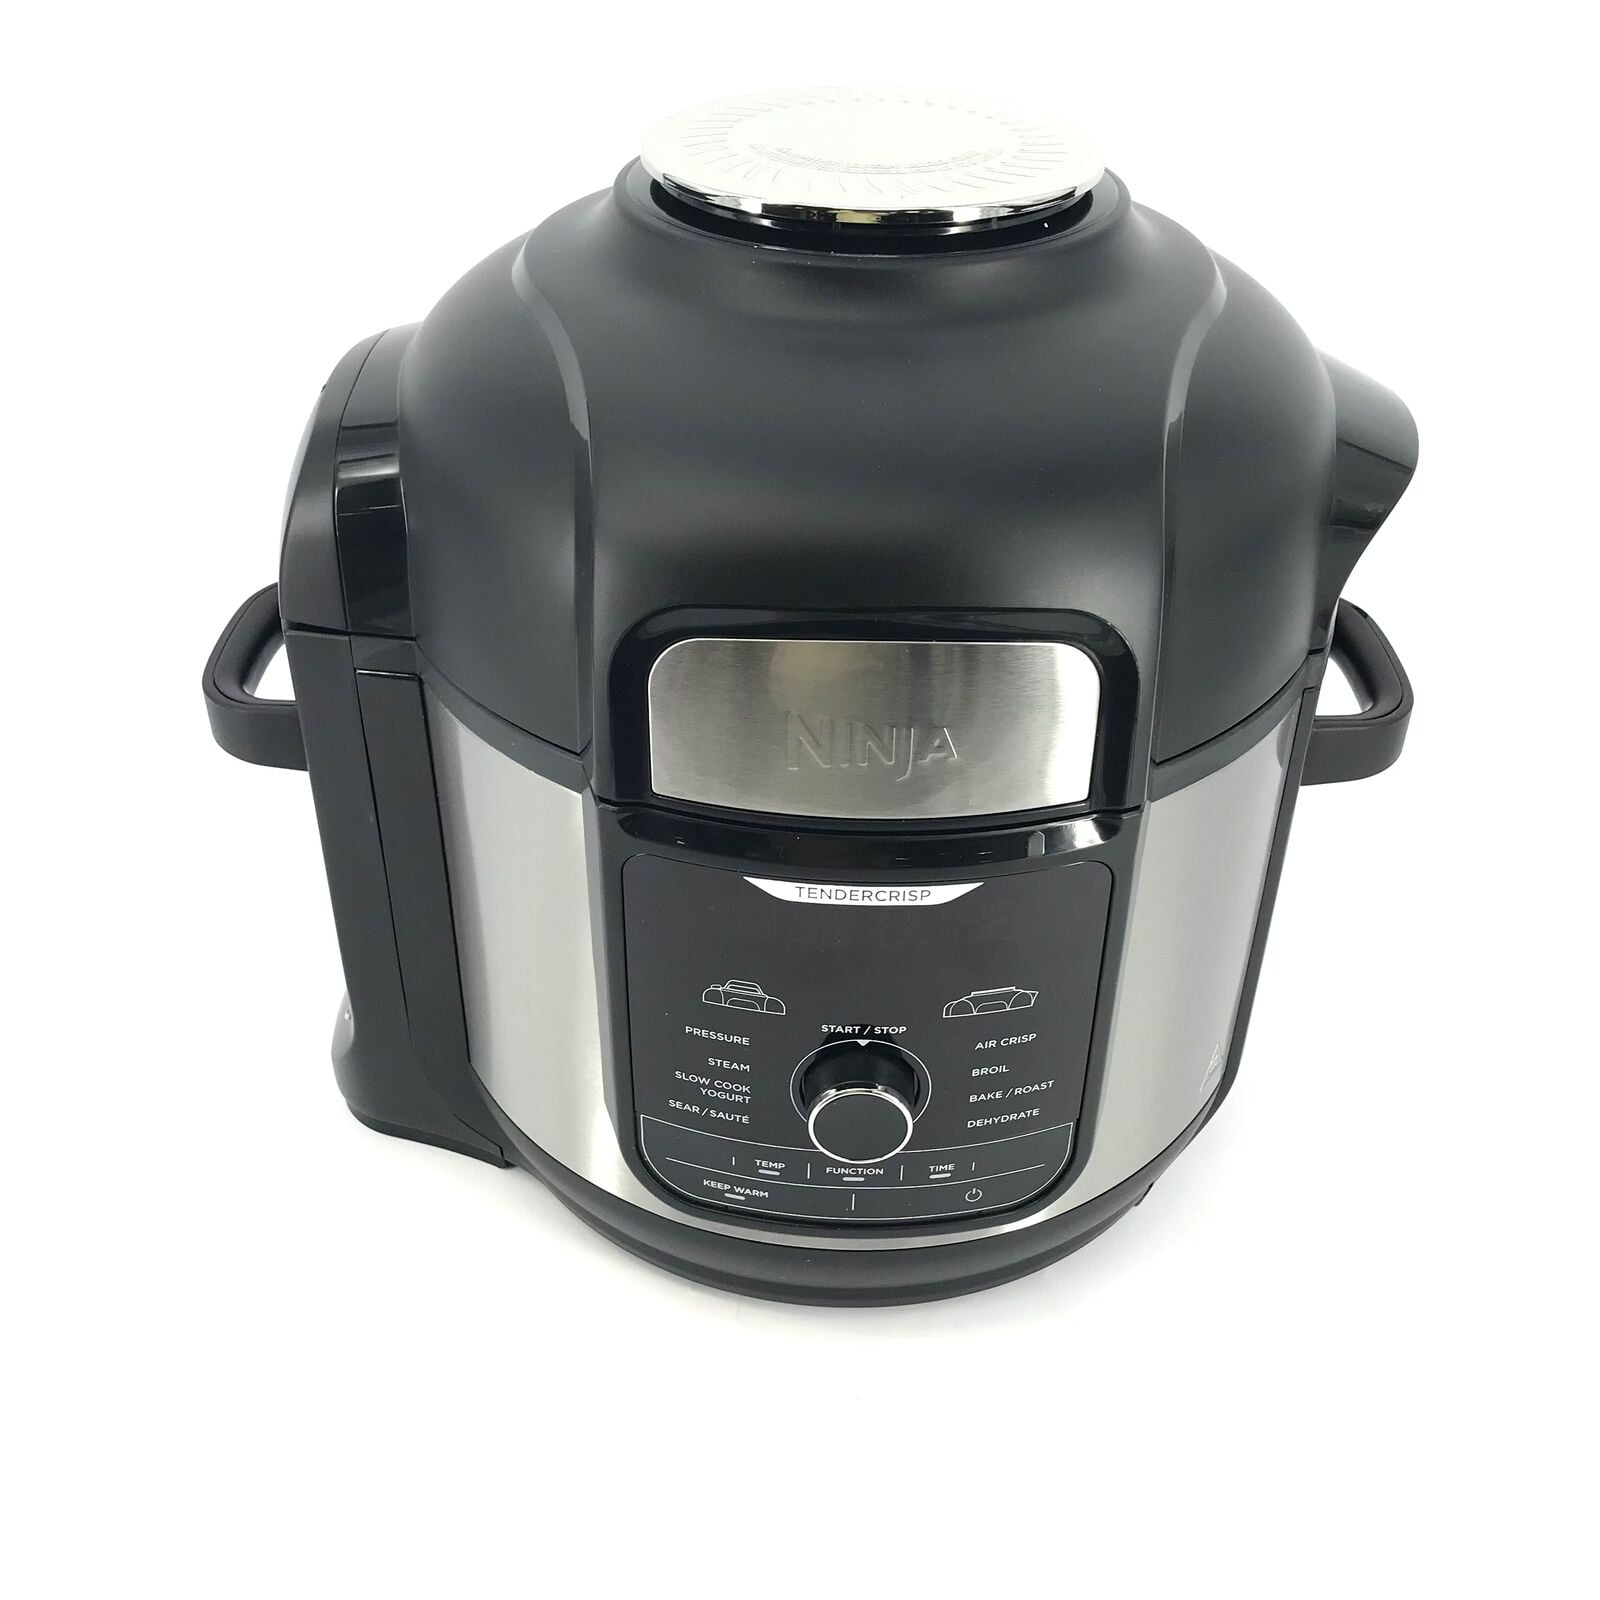 Ninja FD401 Foodi Deluxe Pressure Cooker, 8-Quart, Stainless Steel Used 